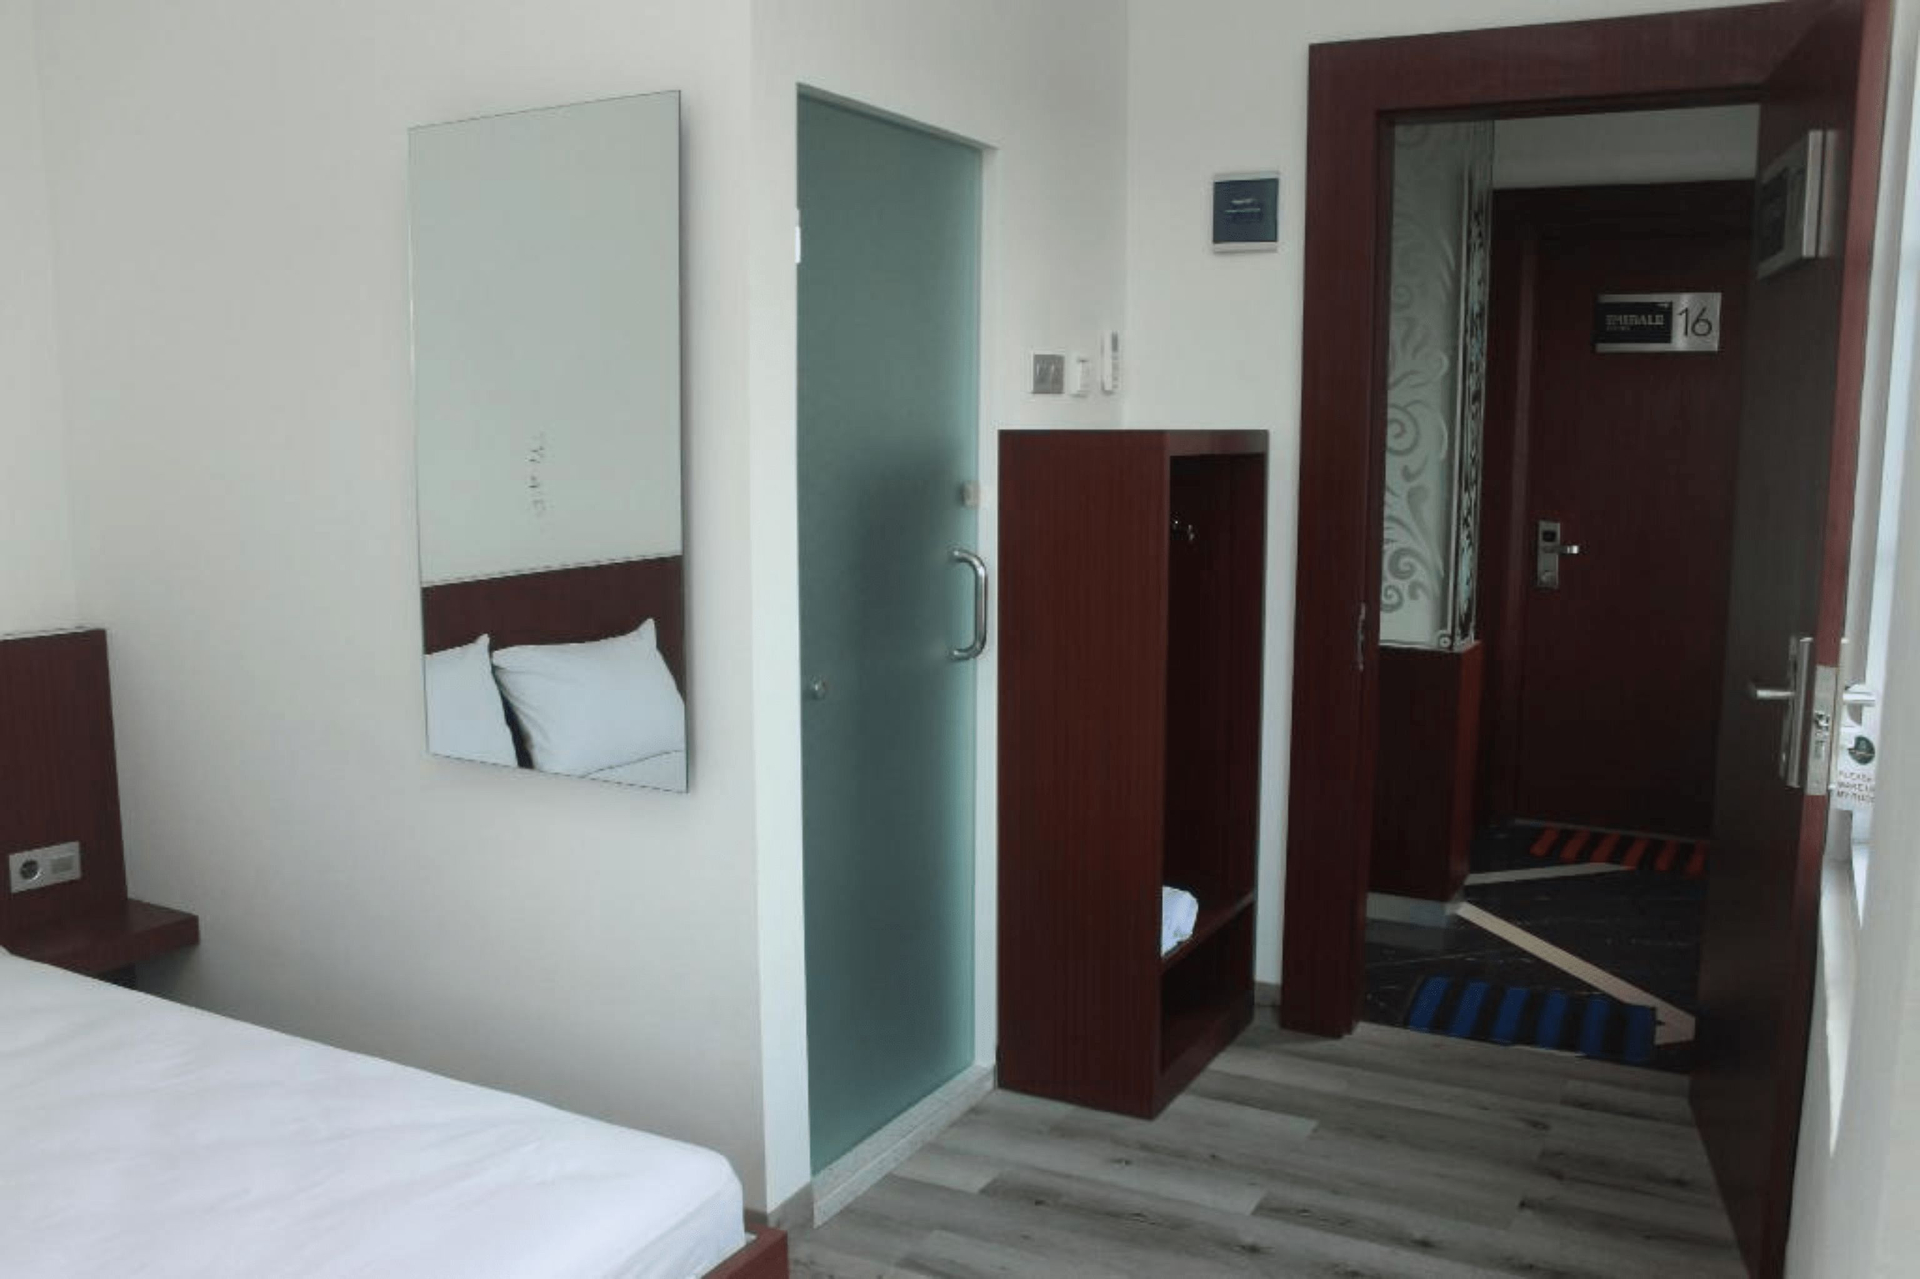 Bedroom 2, The Emerald Inn, Palembang